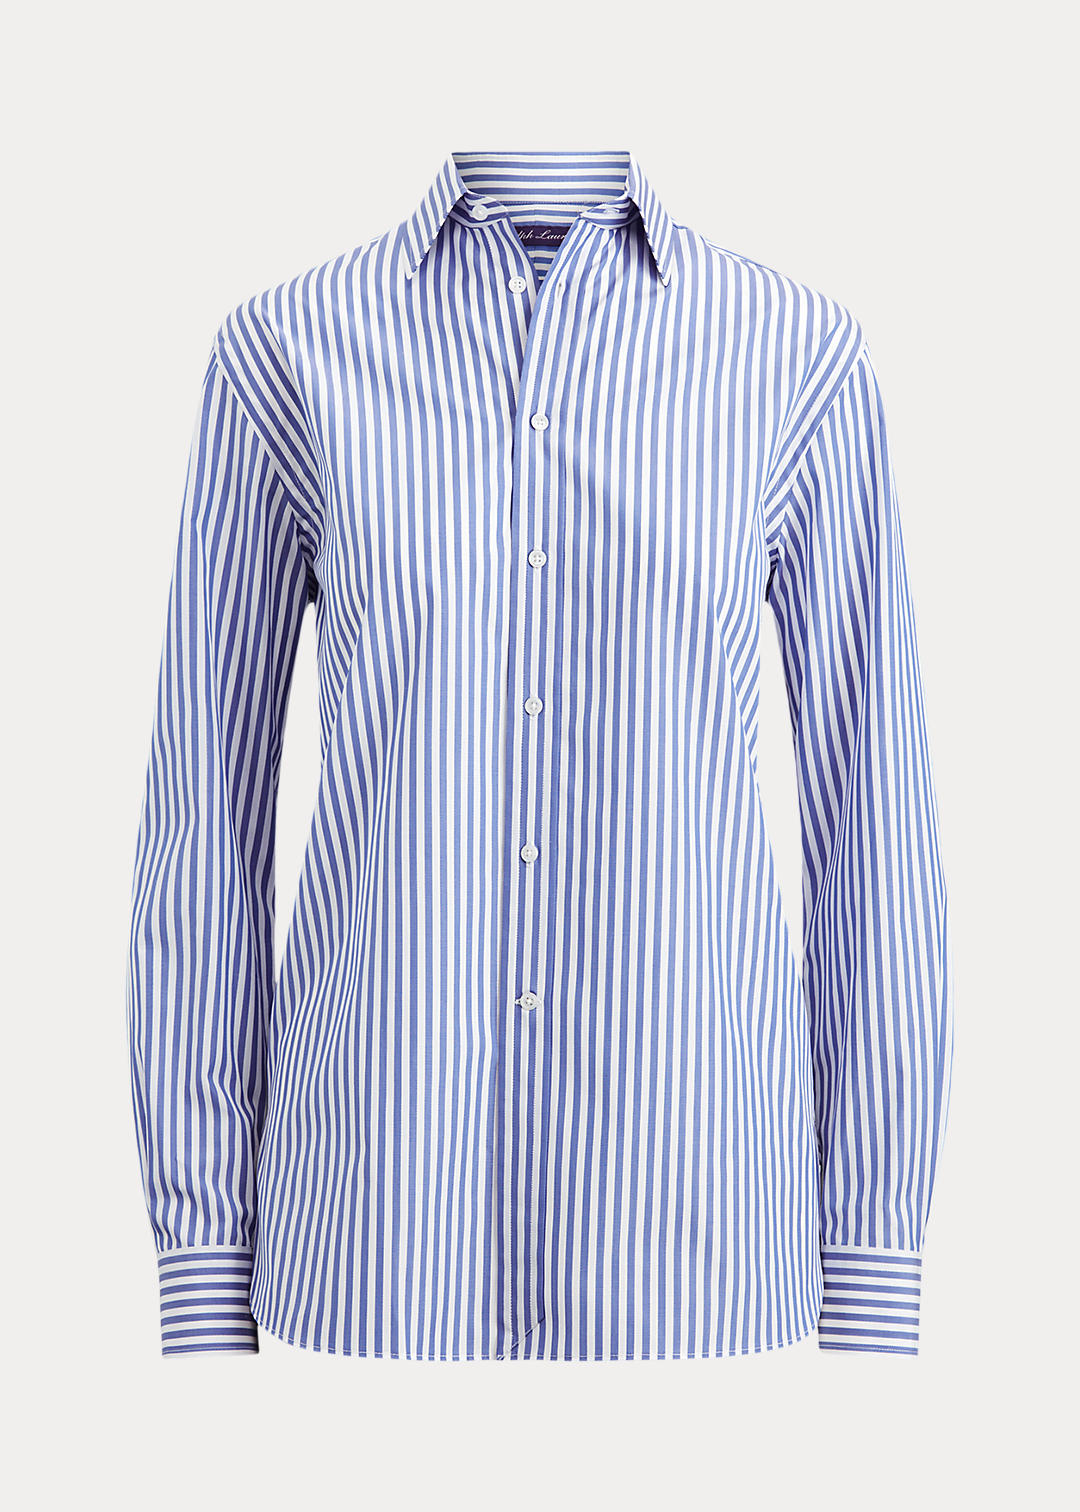 Ralph Lauren Collection Adrien Striped Cotton Shirt 2